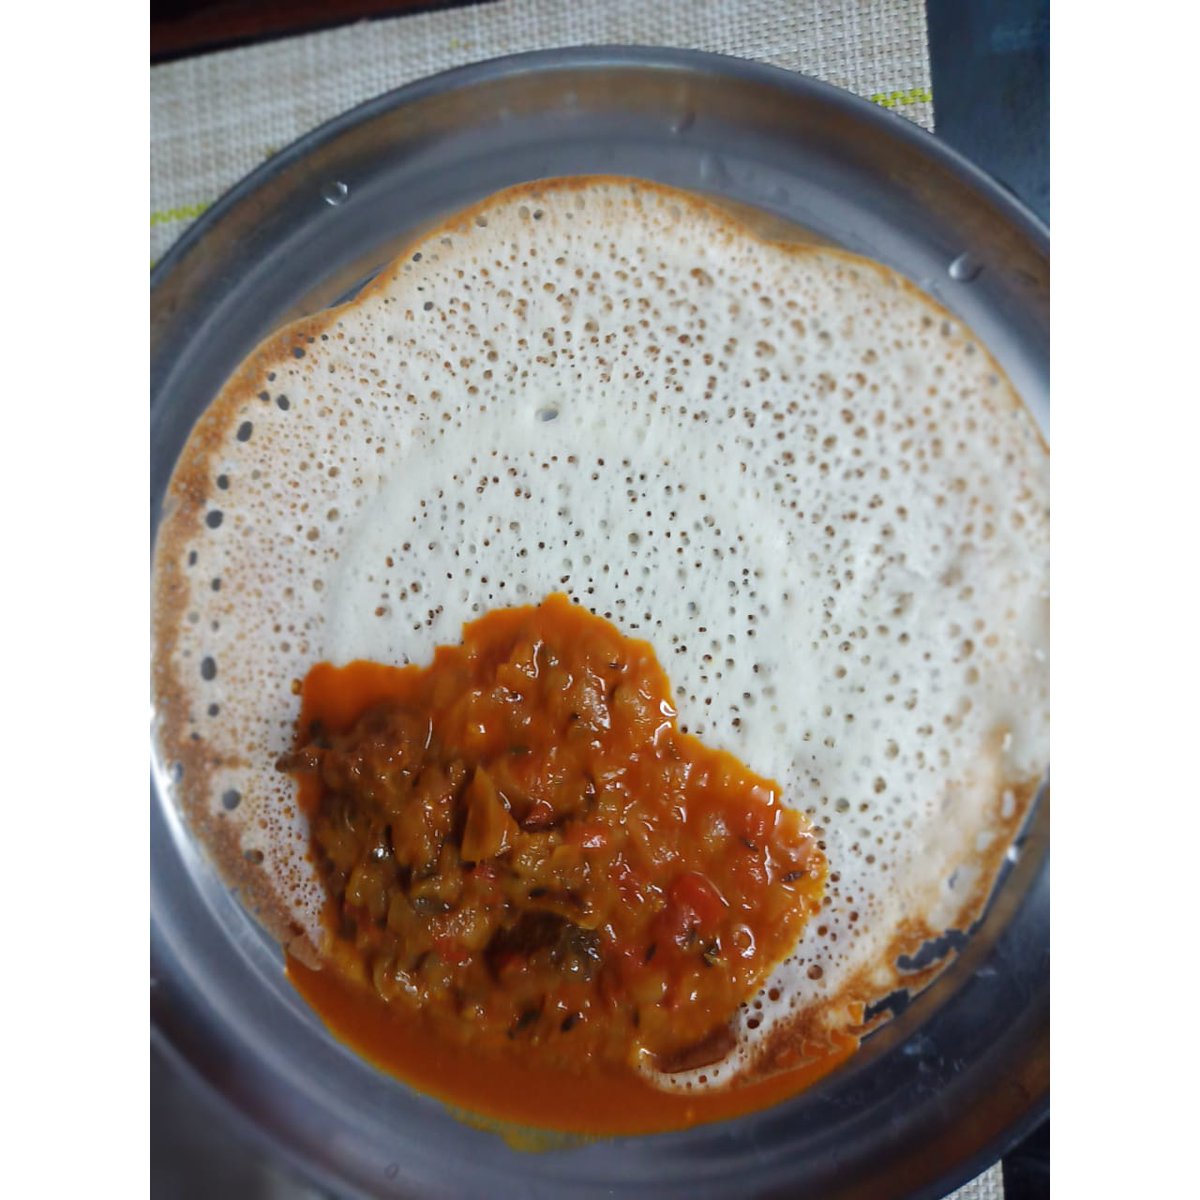 Feedbacks like this really make our day. Sun Dried Goat Meat / Uppukandam. #uppukandam #sundried #goatmeat #uppukari #uppukaruvadu #feedback #review #natural #tradition #tamil #tamilnadu #foodies #FoodieTwitter #foodblog #foodblogger #vlogger #Chennaifoodguide #wherechennaieats